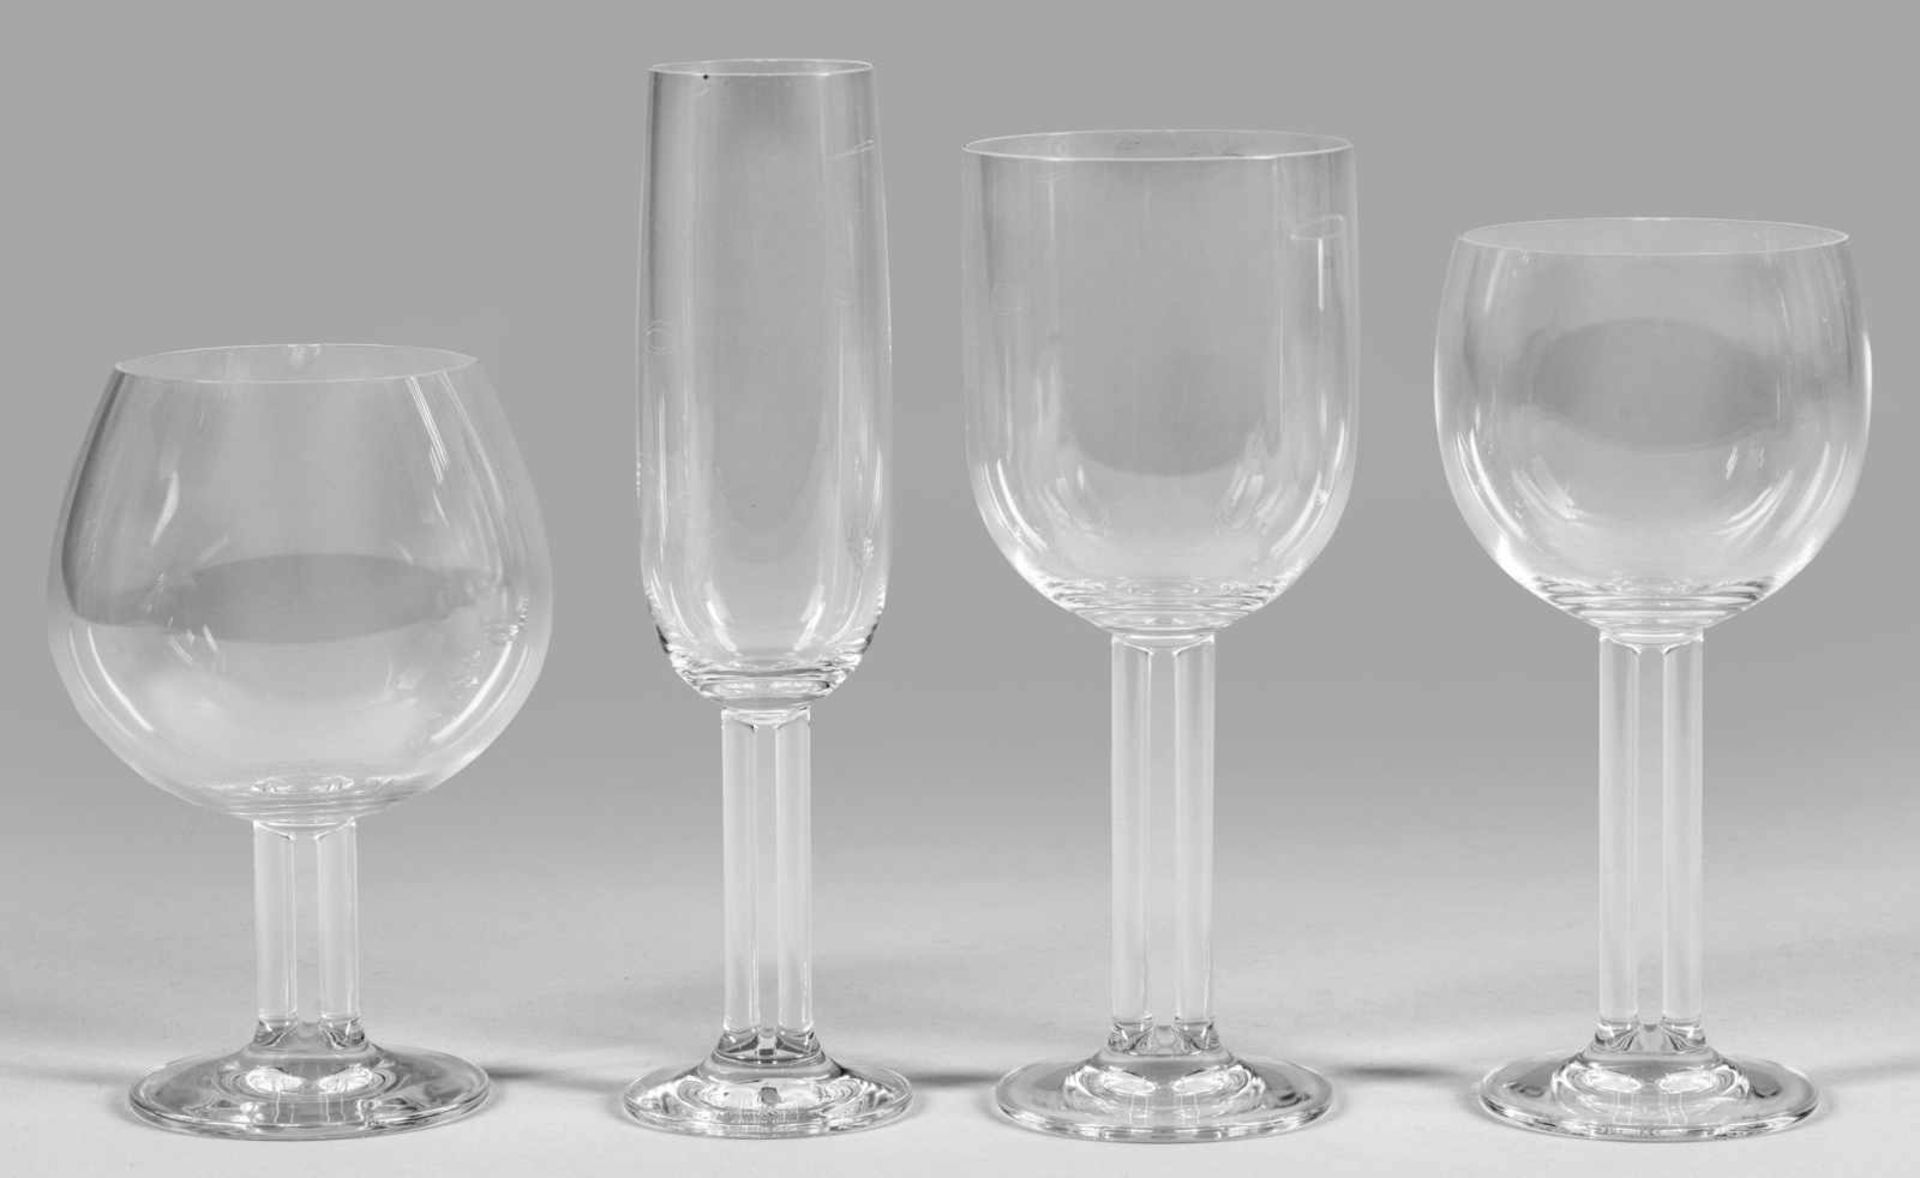 31 Gläser aus dem Rosenthal-Service "Cupola Form 26150"Farbloses Glas. 6 Cognacschwenker H. 15,5 cm;